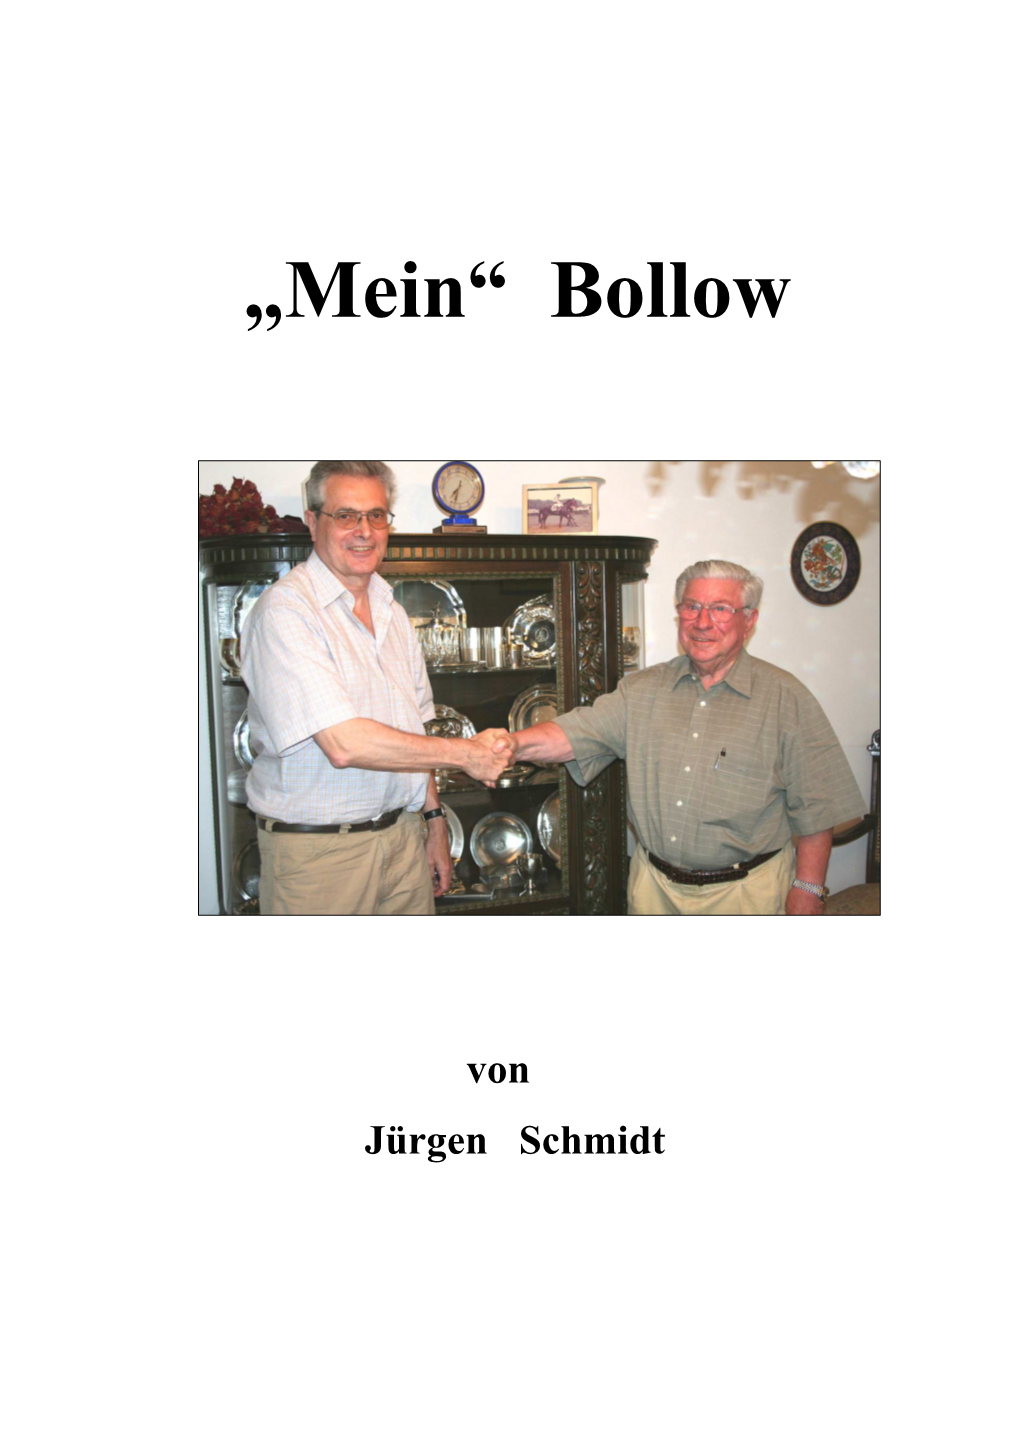 Hein-Bollow-Das Buch